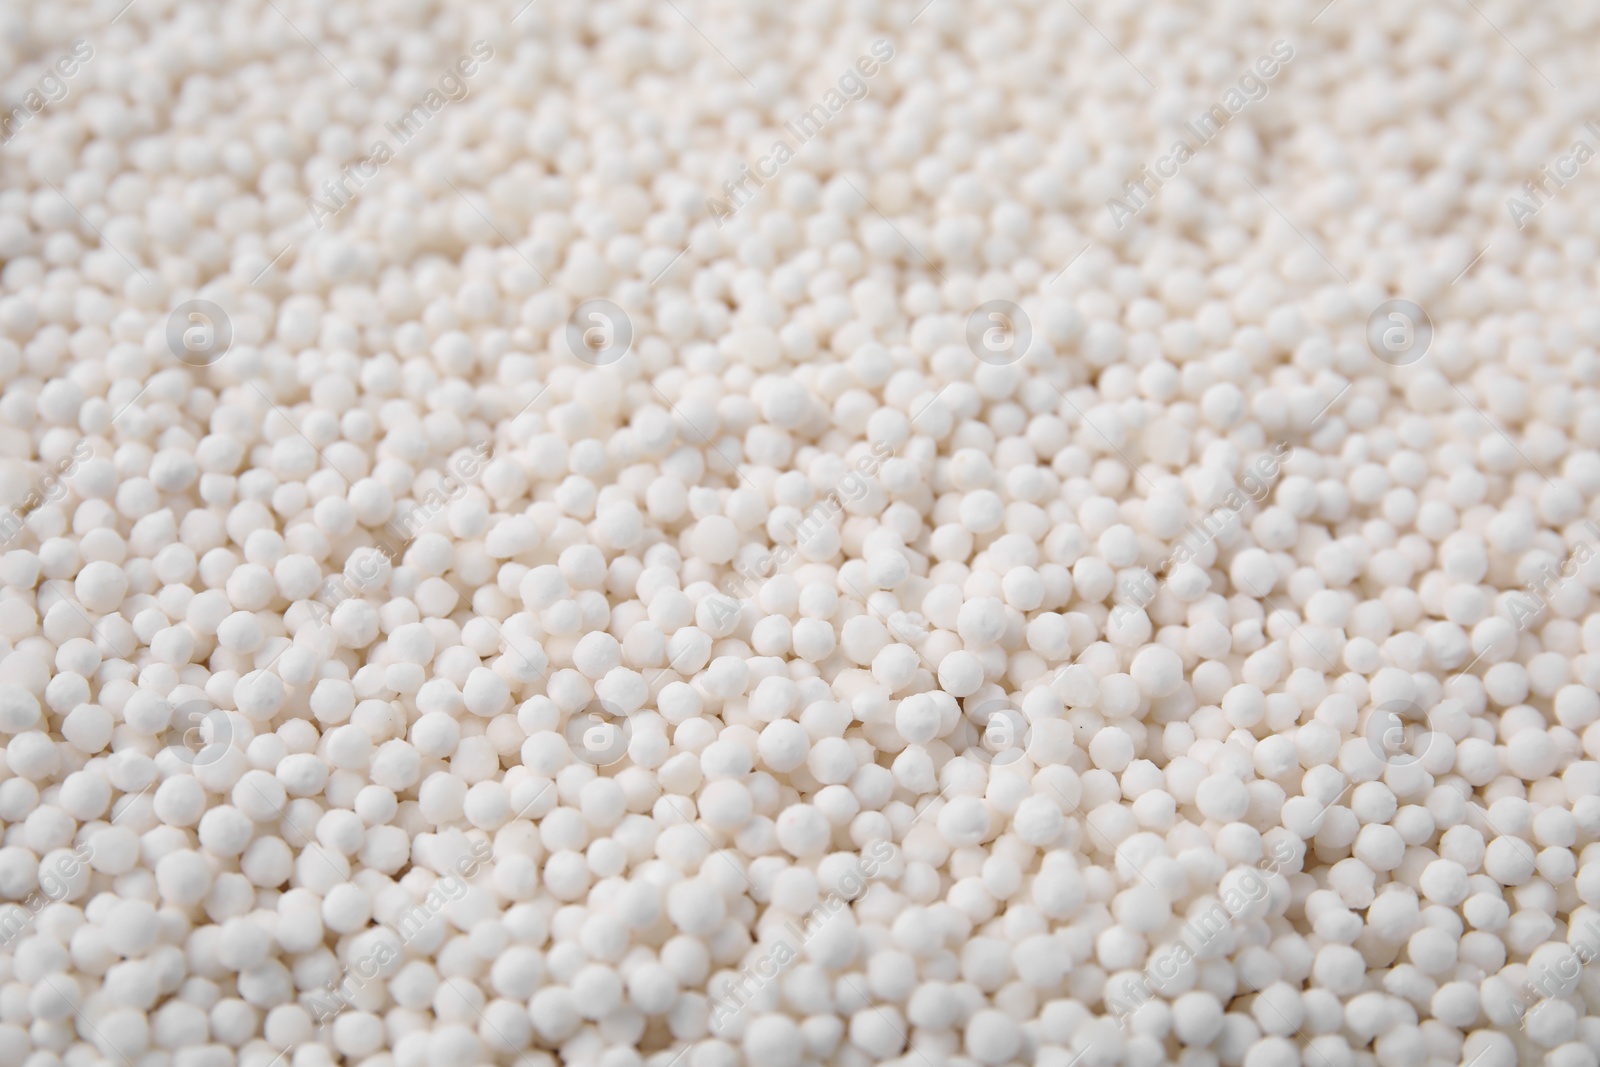 Photo of White tapioca pearls as background, closeup view